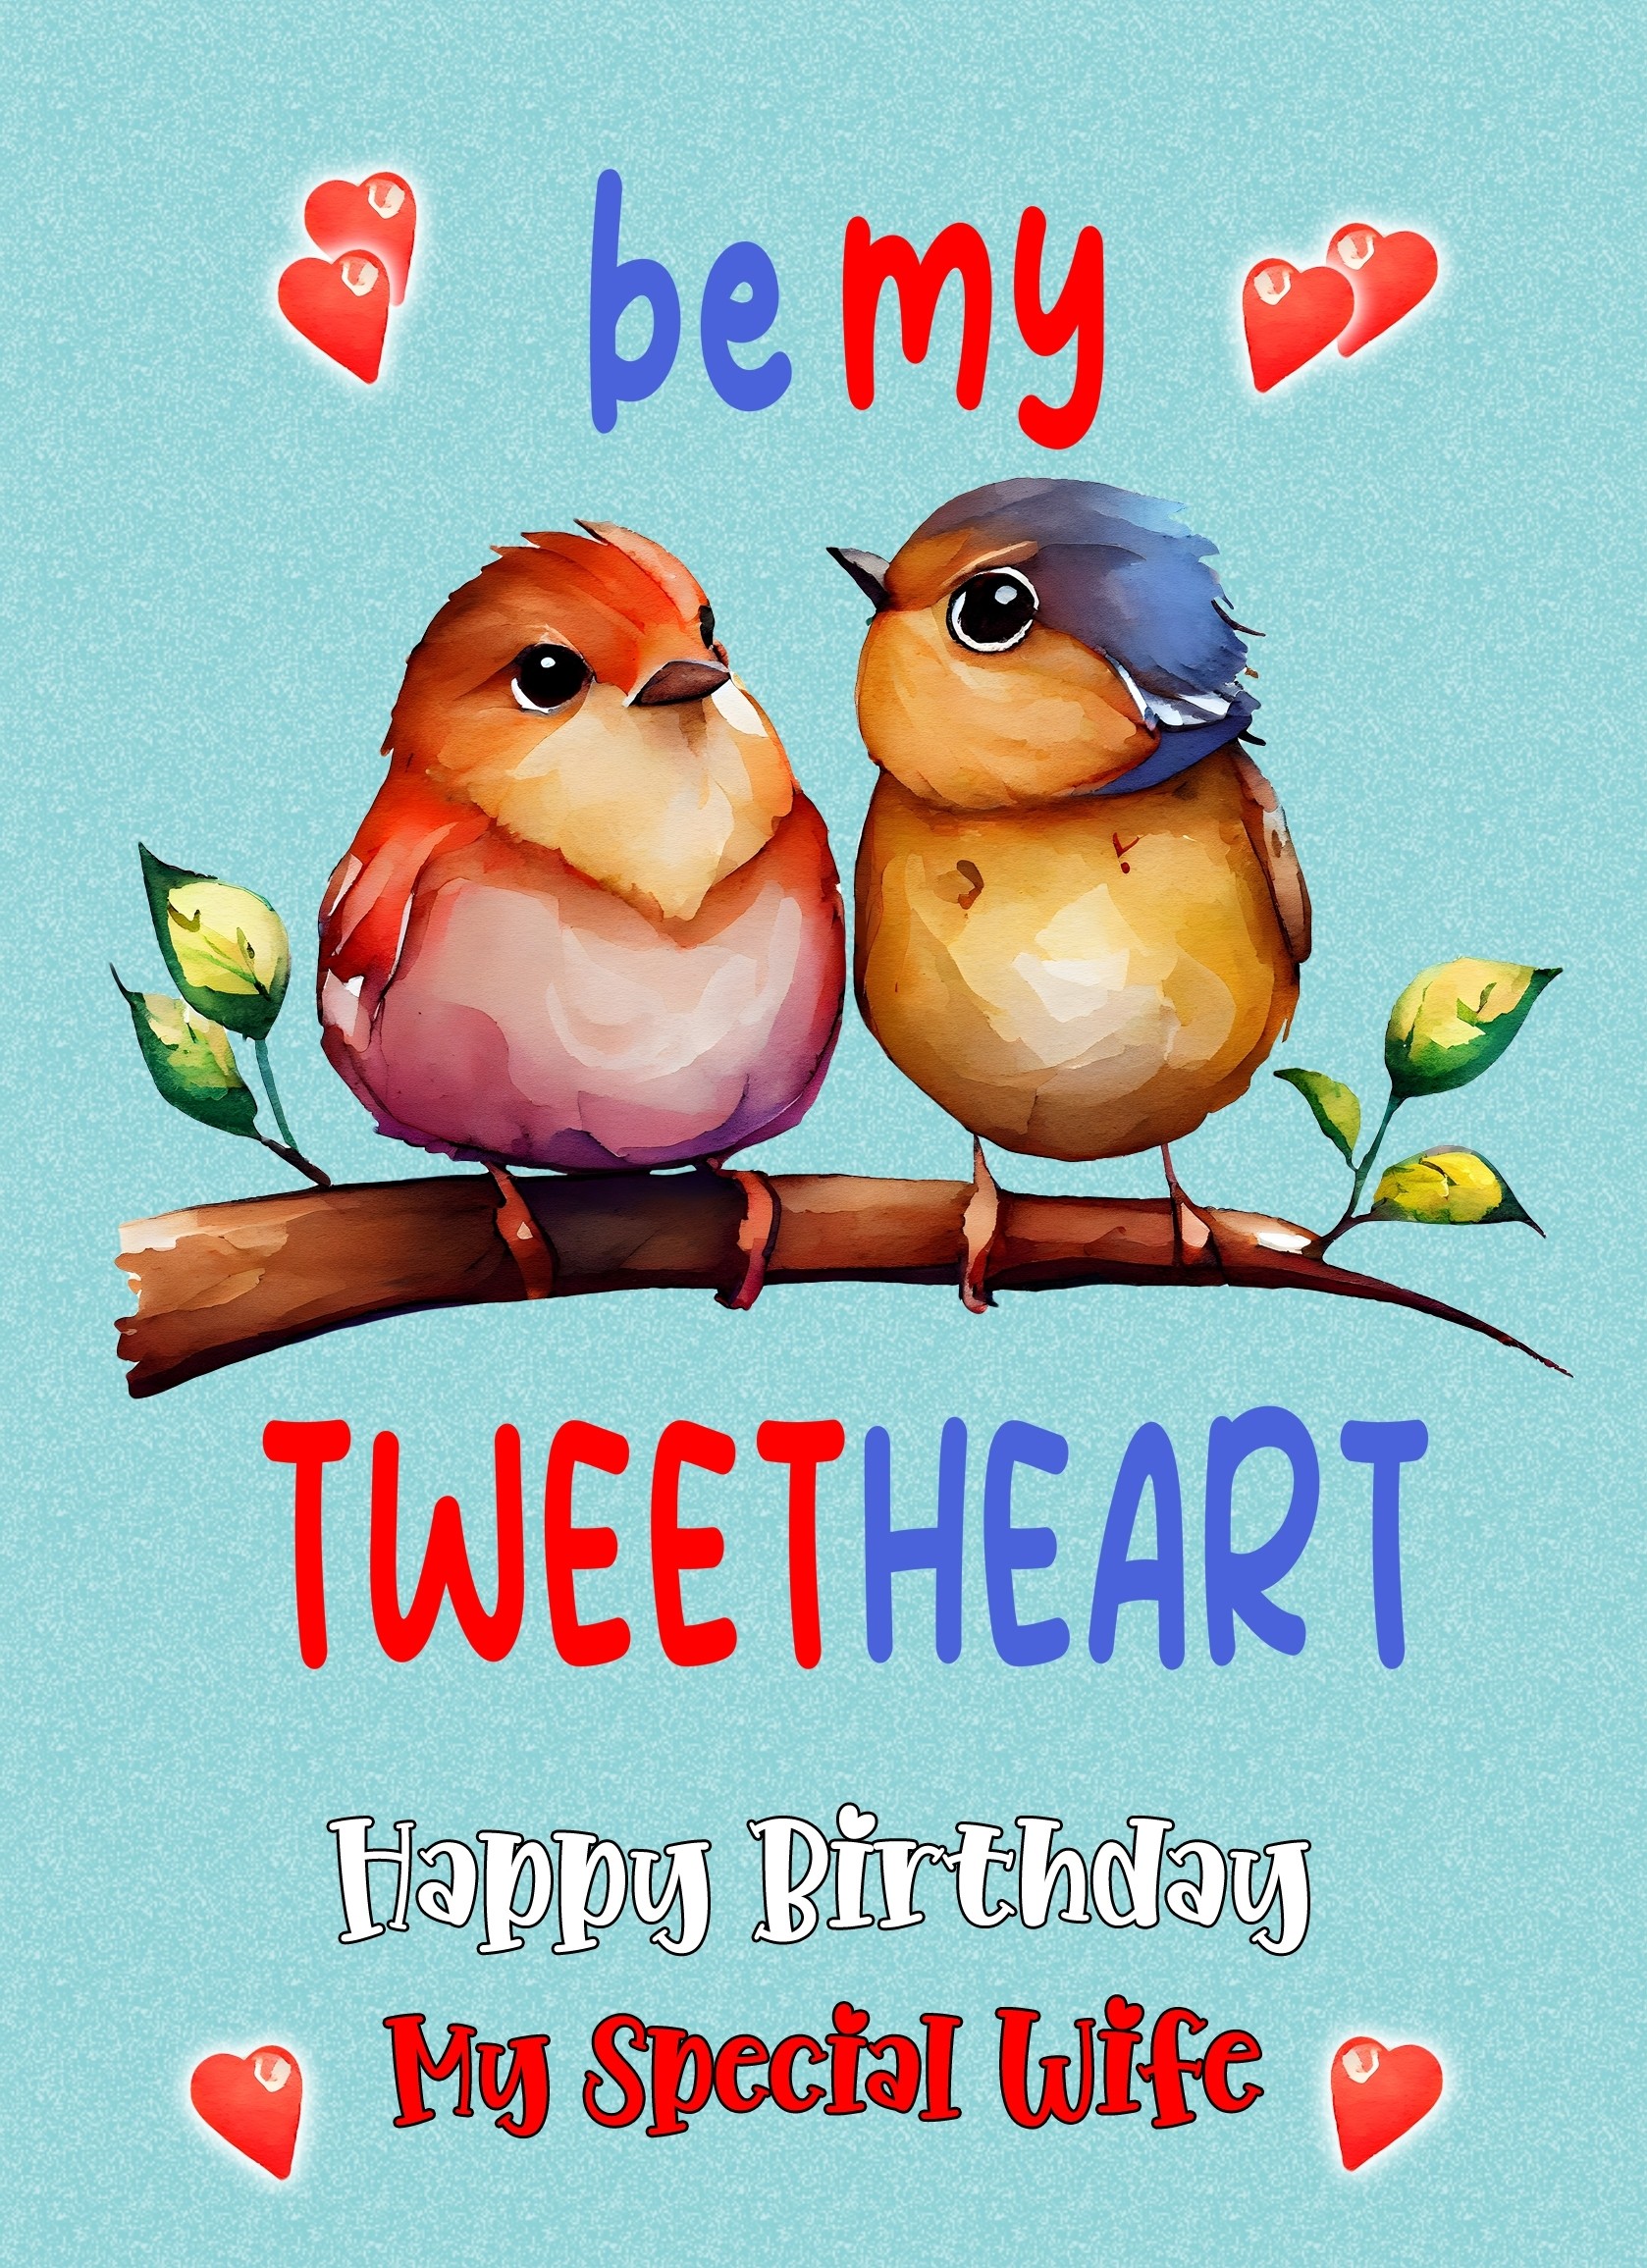 Funny Pun Romantic Birthday Card for Wife (Tweetheart)